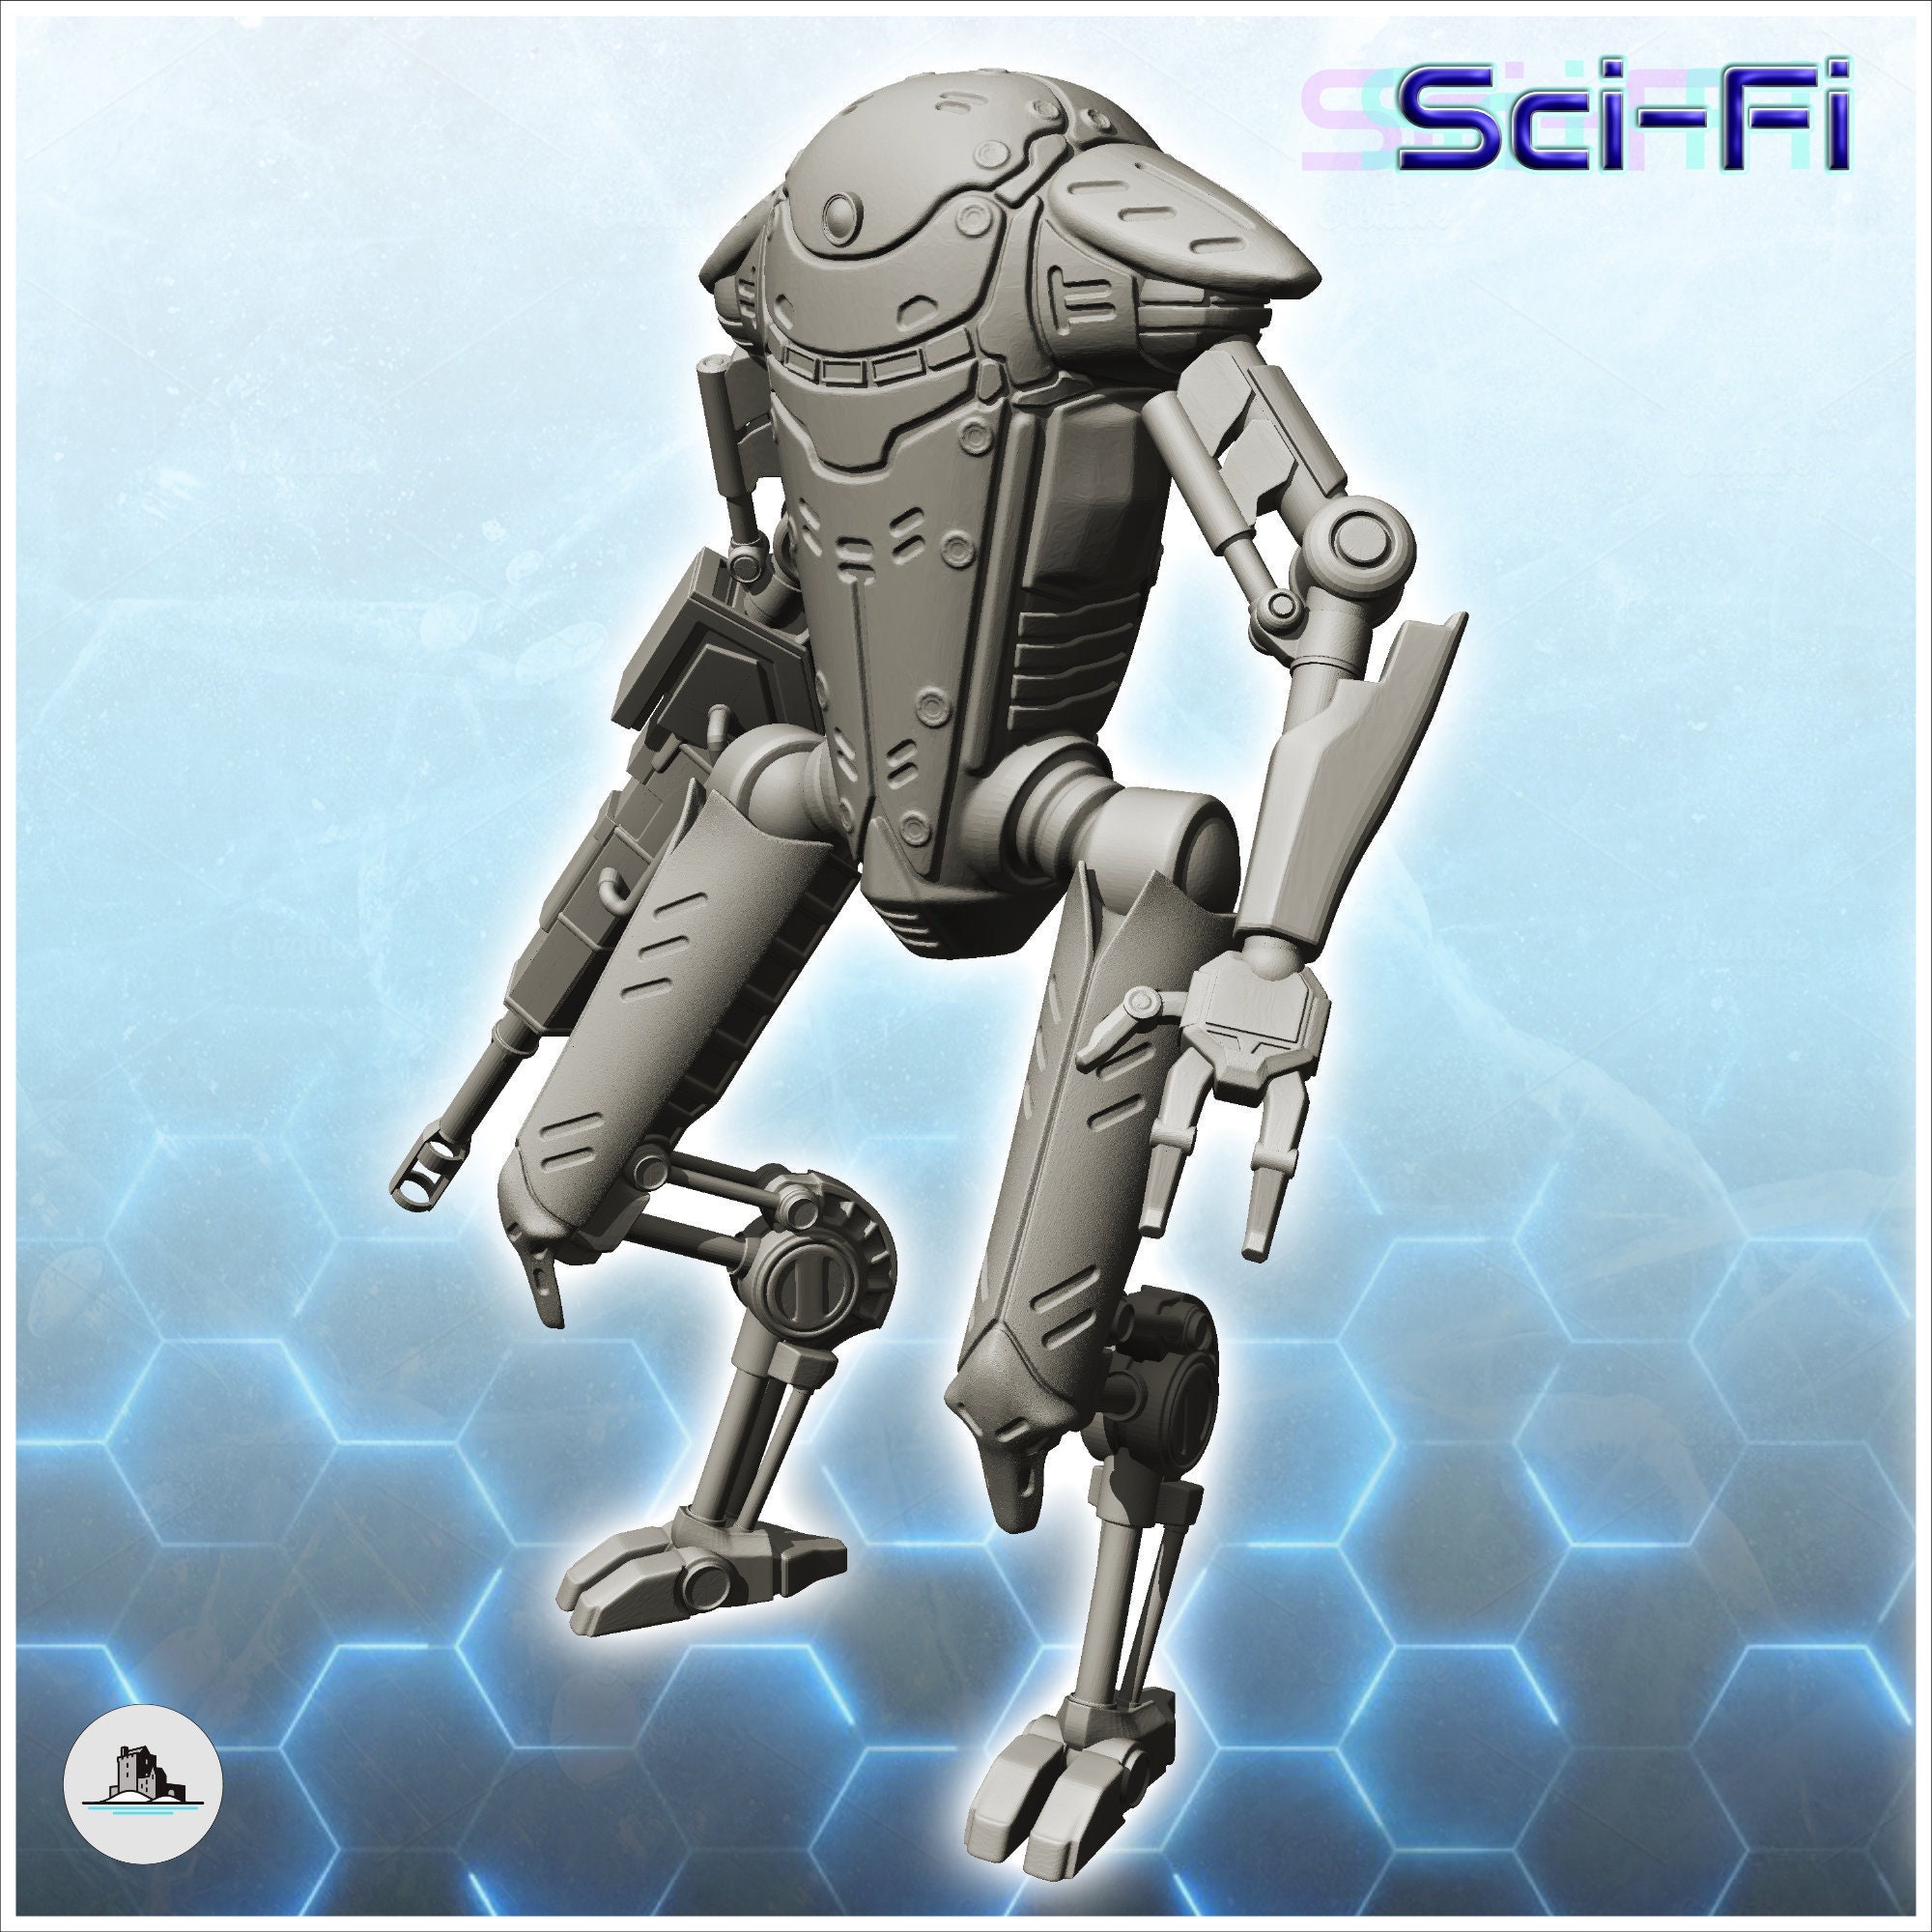 Hartolia miniatures | Enos combat robot (11) | STL file for 3D printing